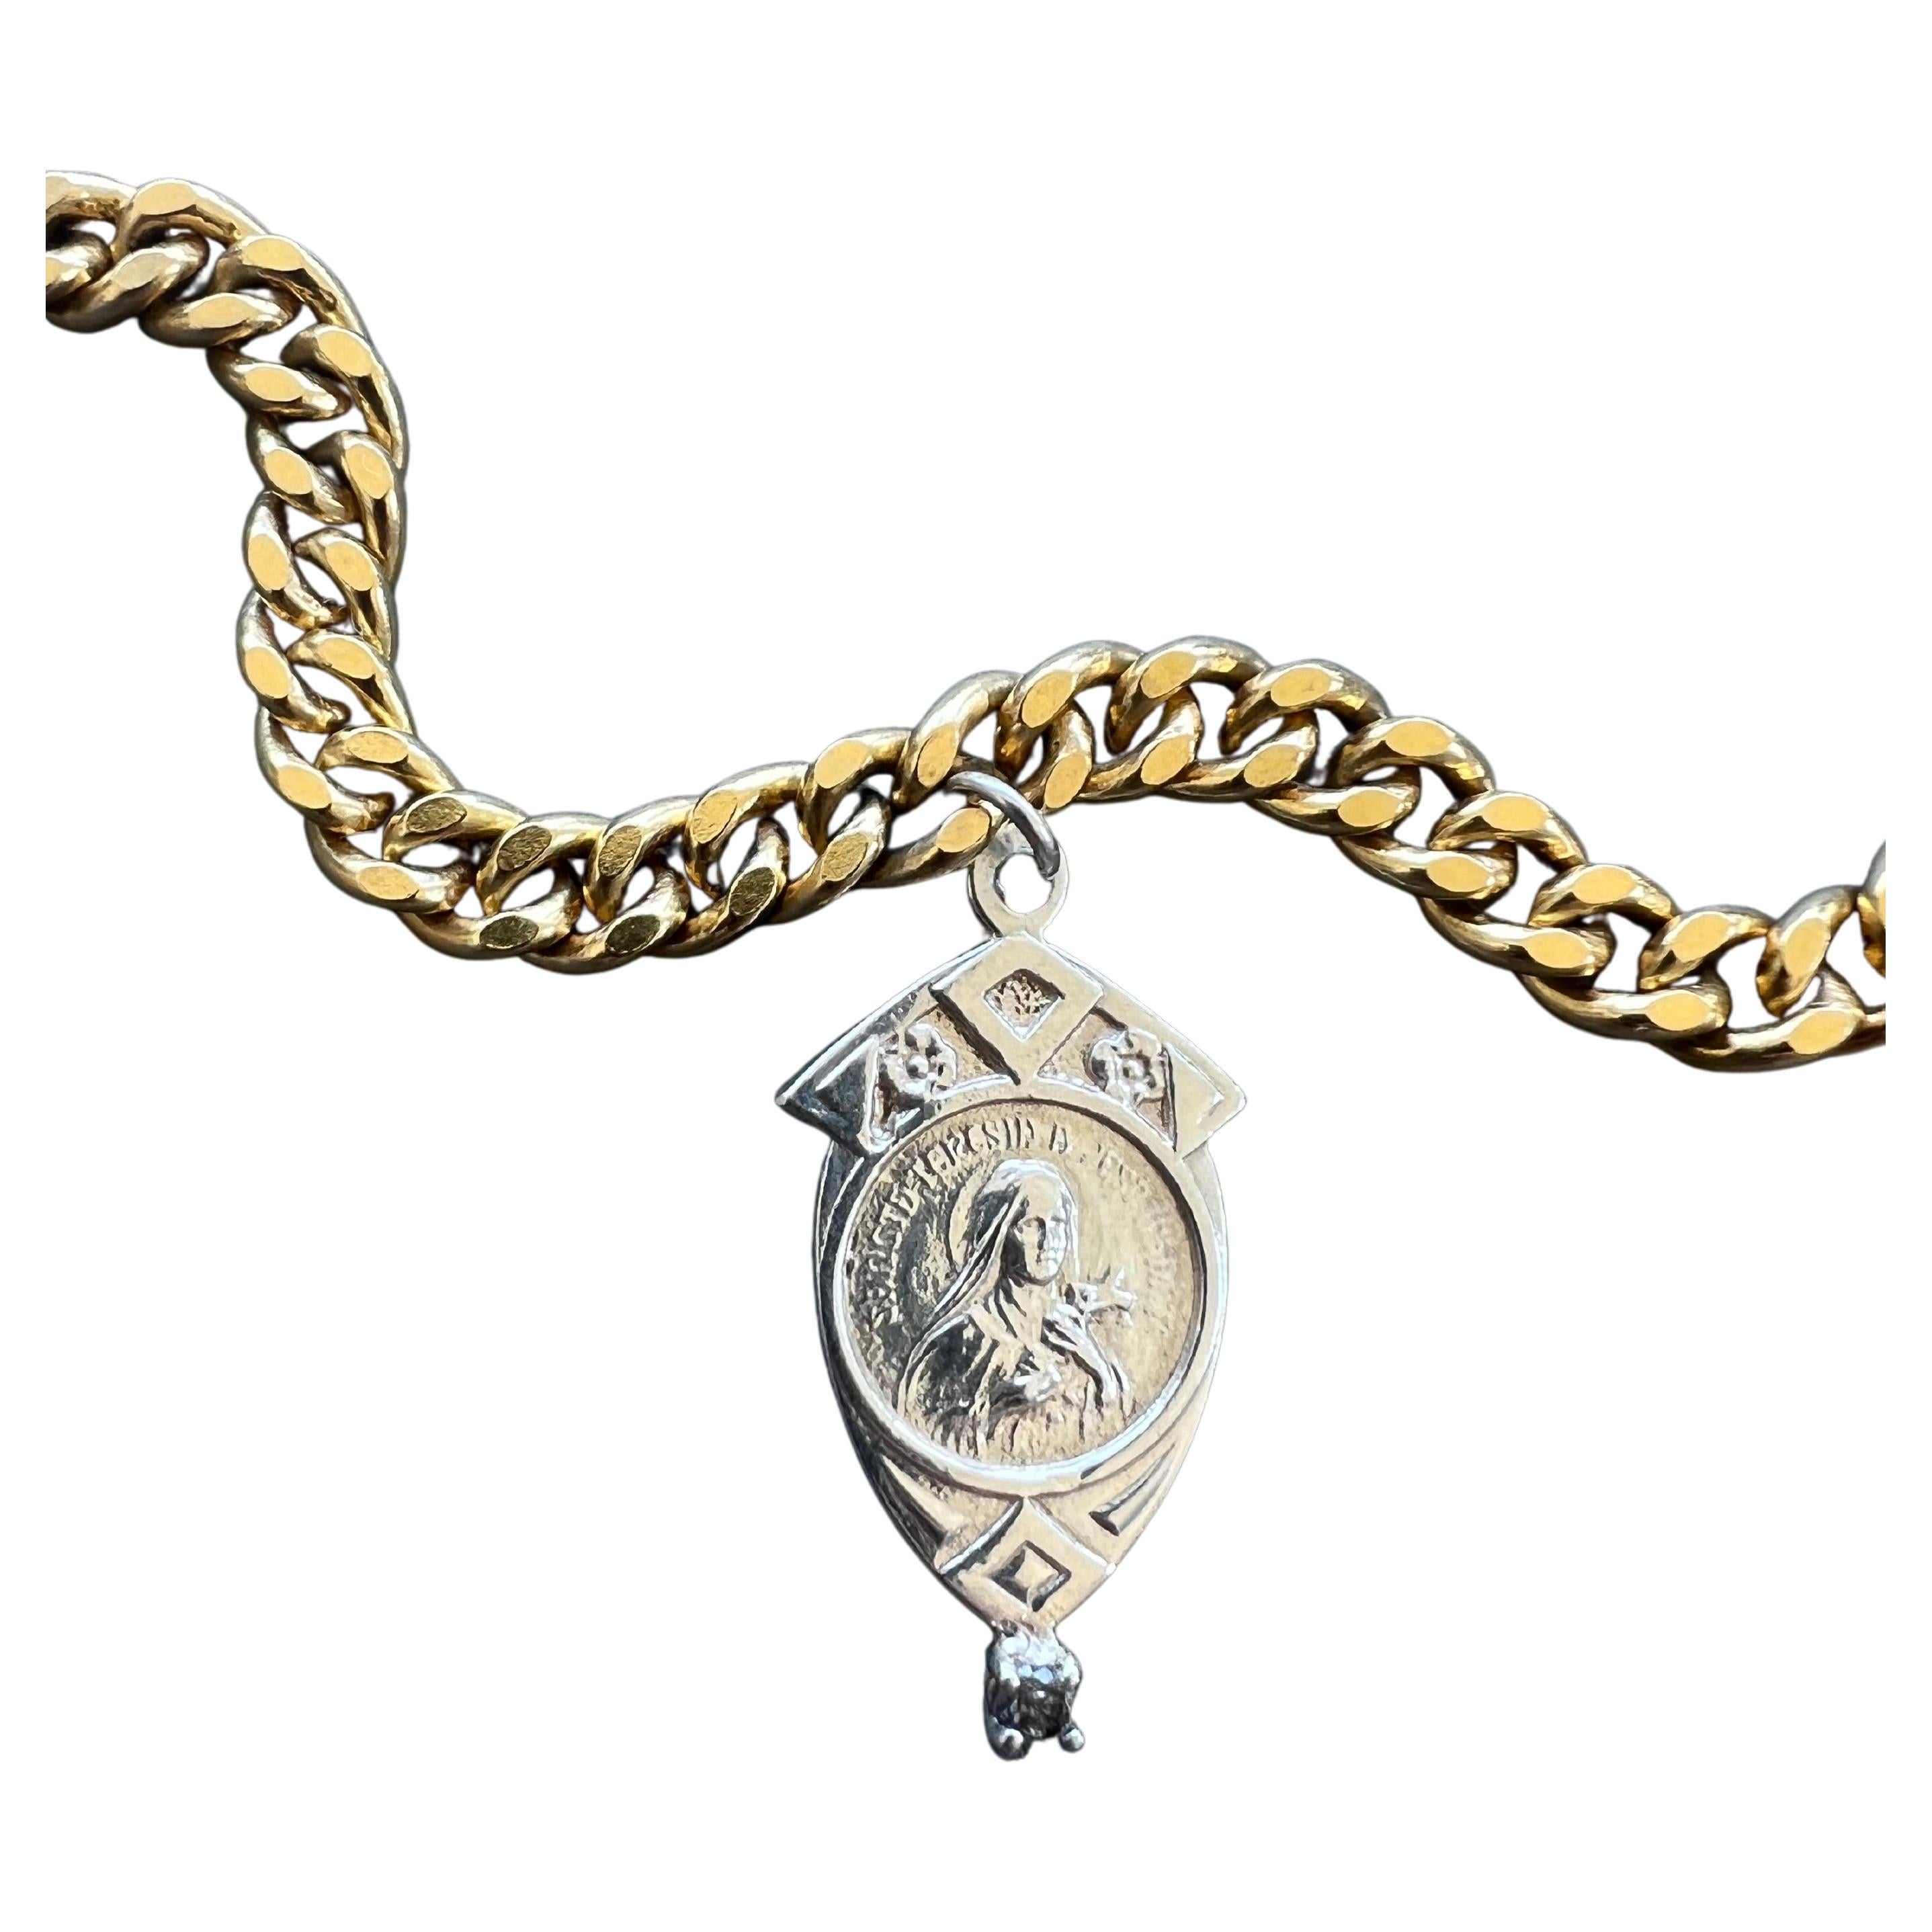 White Diamond Pendant Virgin Mary Sterling Silver Chain Choker Necklace 